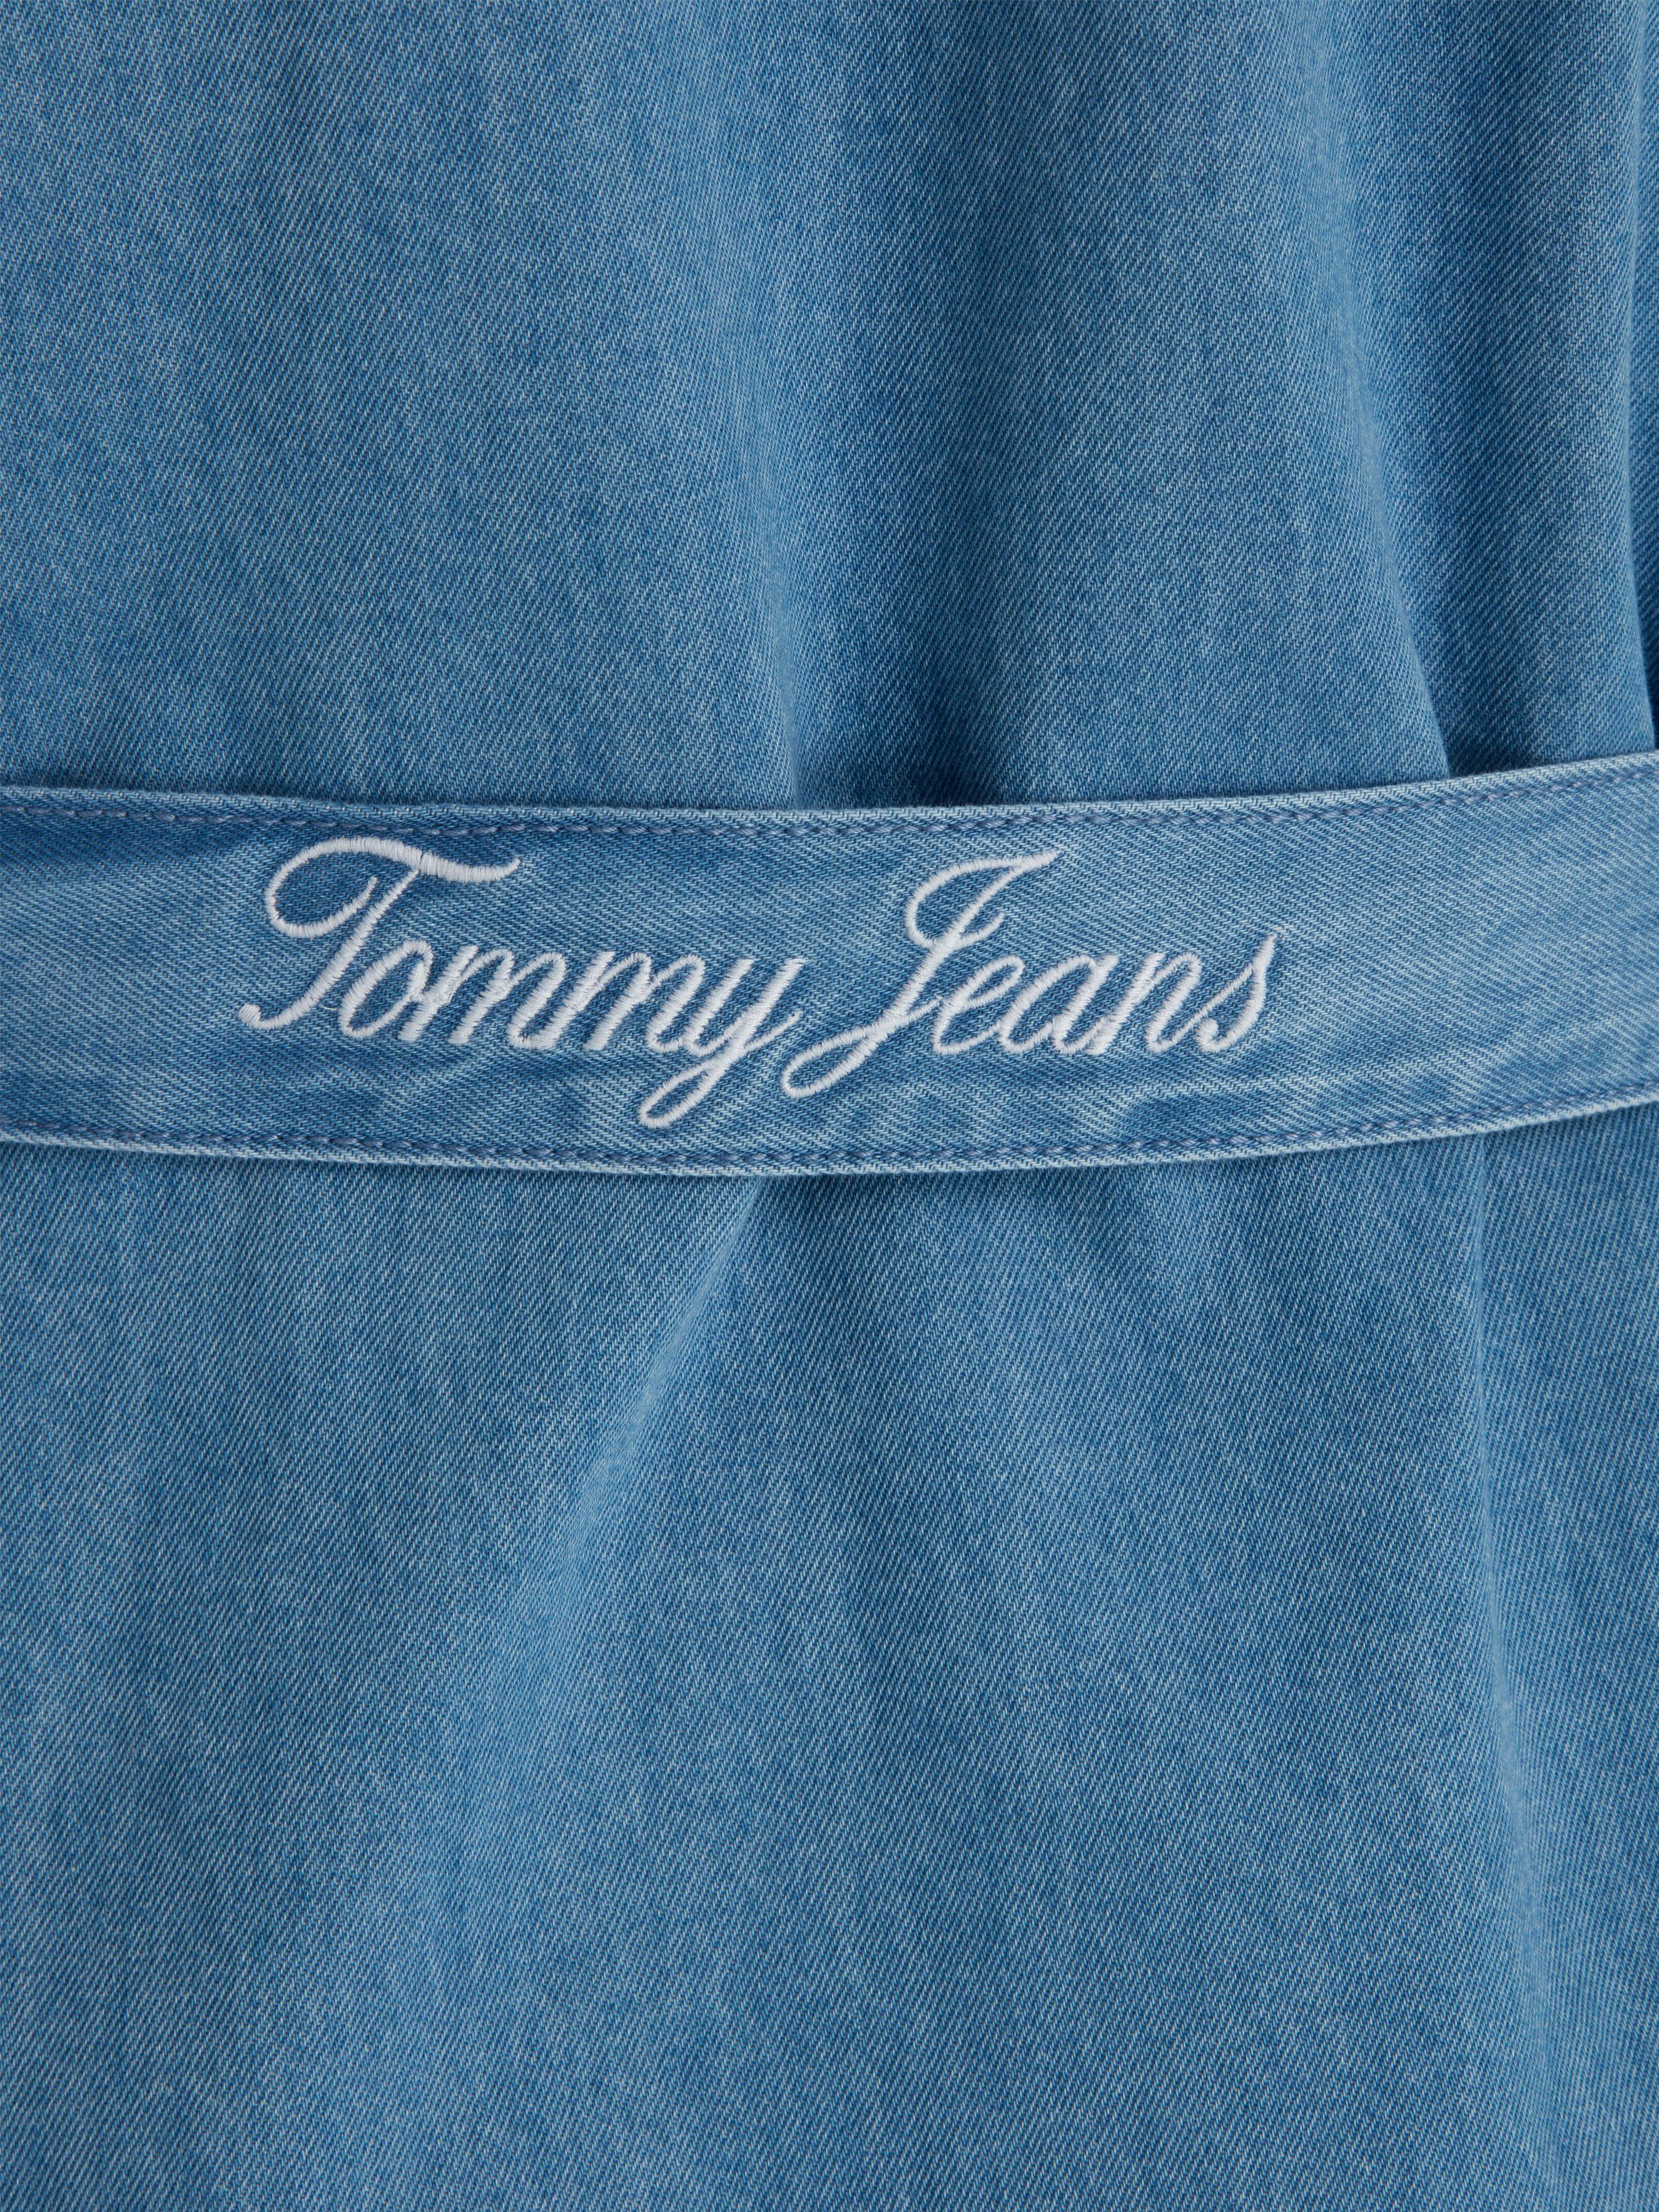 Tommy Jeans DRESS BELTED Shirtkleid DENIM SHIRT EXT TJW Curve